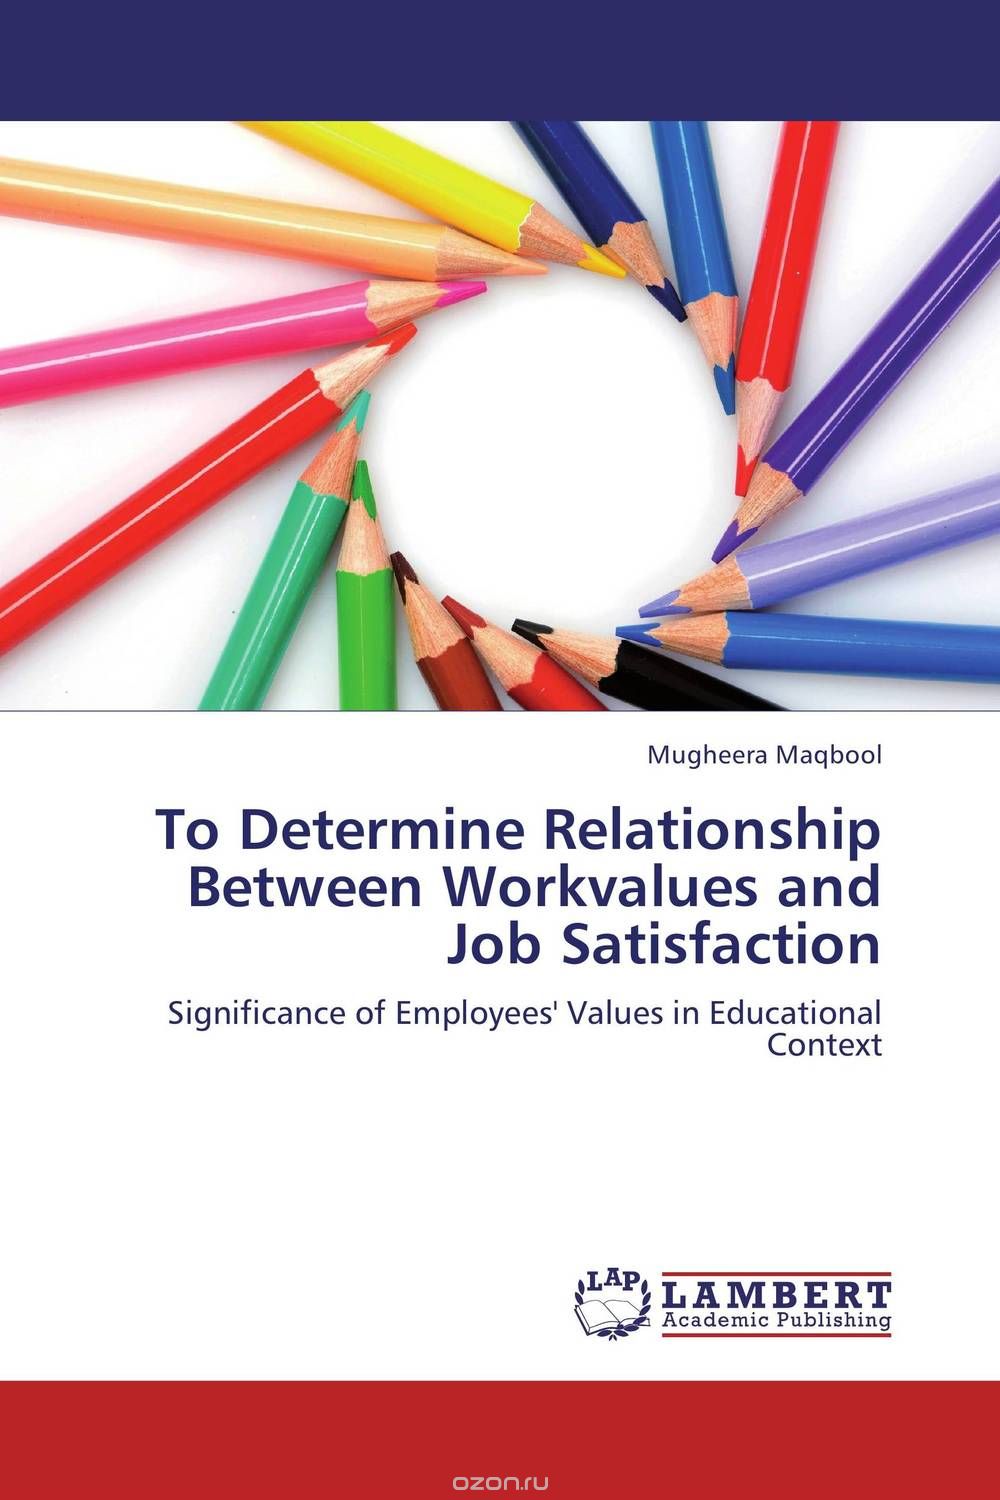 Скачать книгу "To Determine Relationship Between Workvalues and Job Satisfaction"